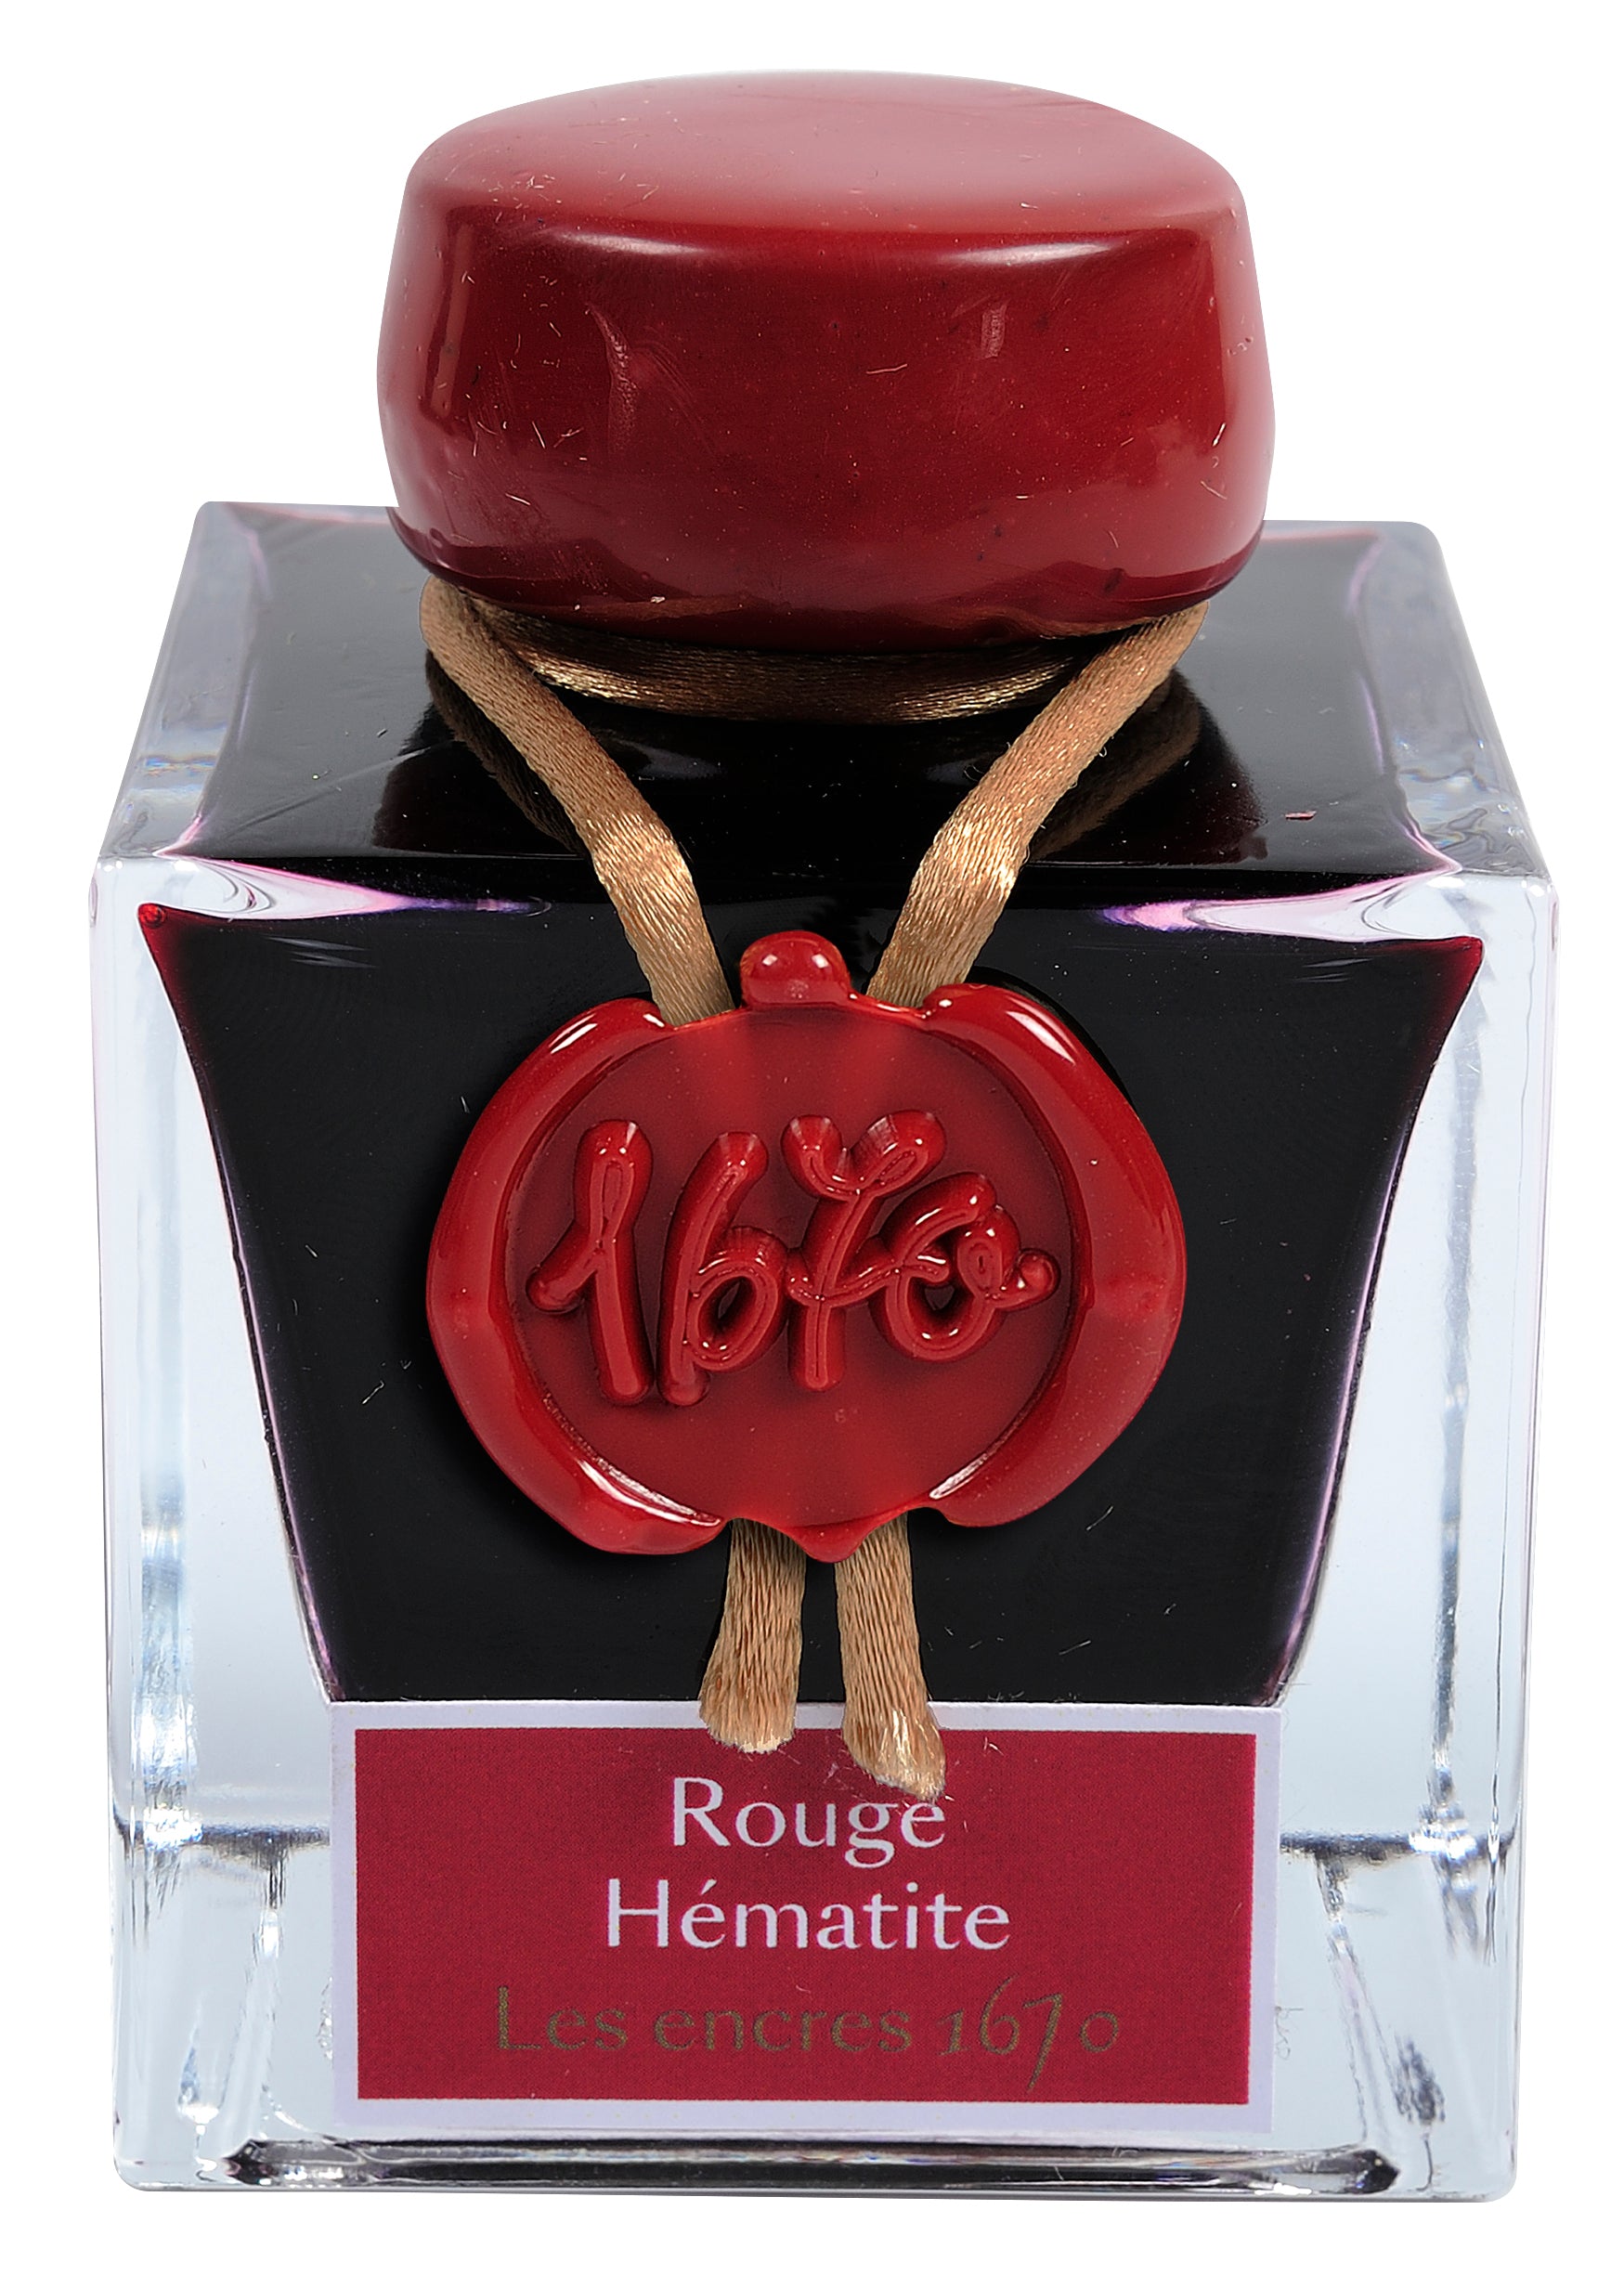 Herbin 1670 - Rouge hematite (hämatitrot)